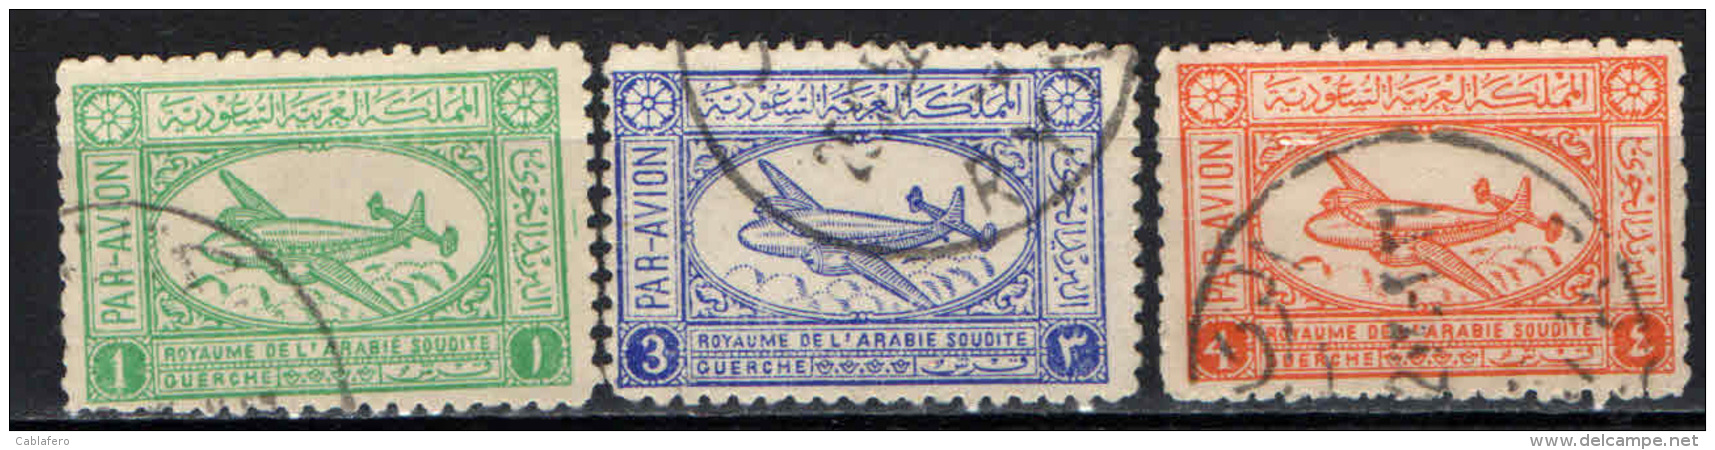 ARABIA SAUDITA - 1949 - AEREO IN VOLO - USATI - Arabia Saudita